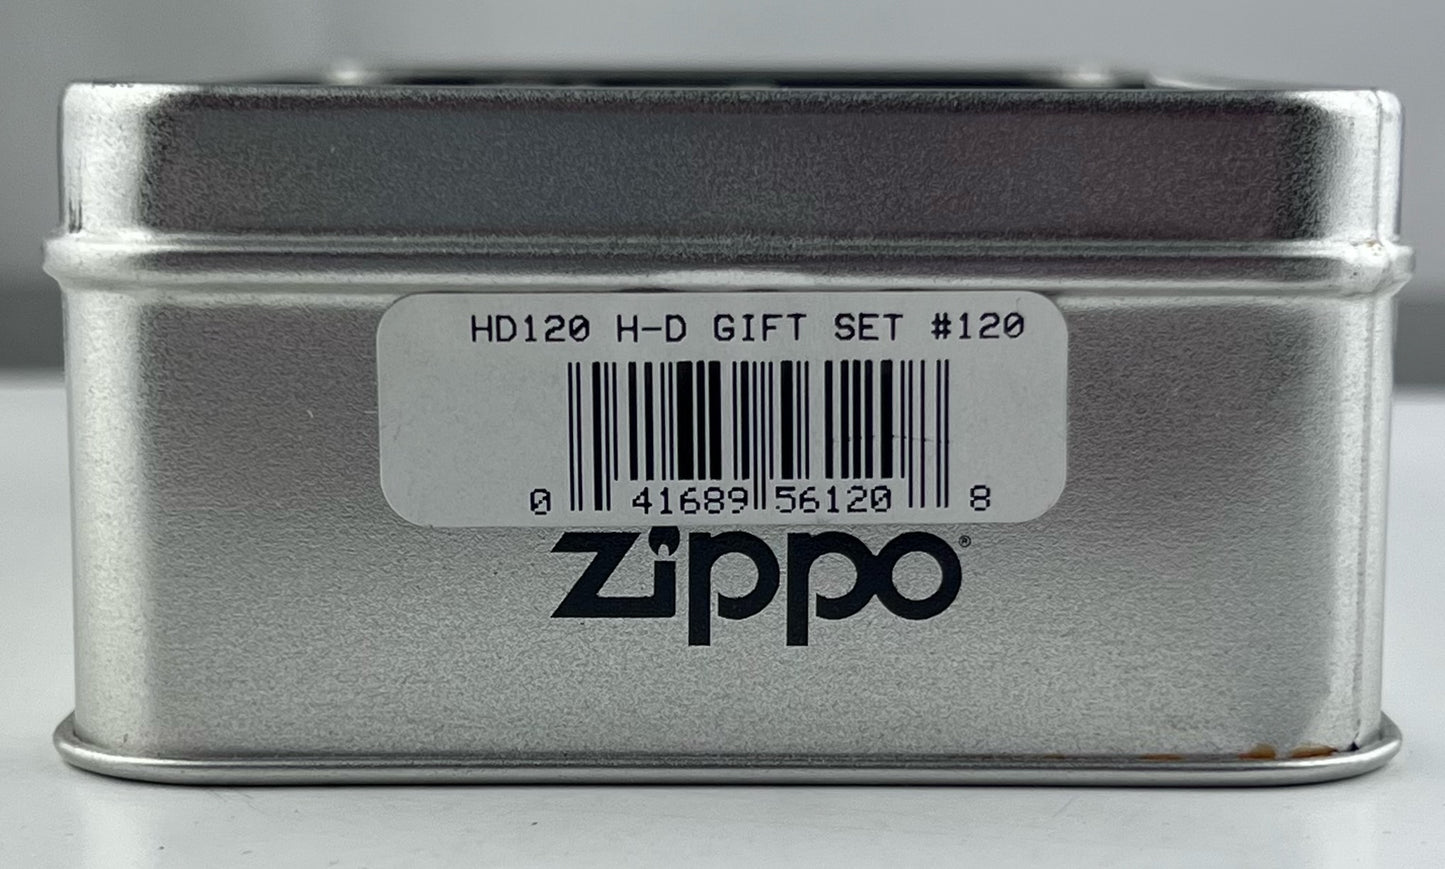 Zippo HD120 Harley Davidson Gift Set#120